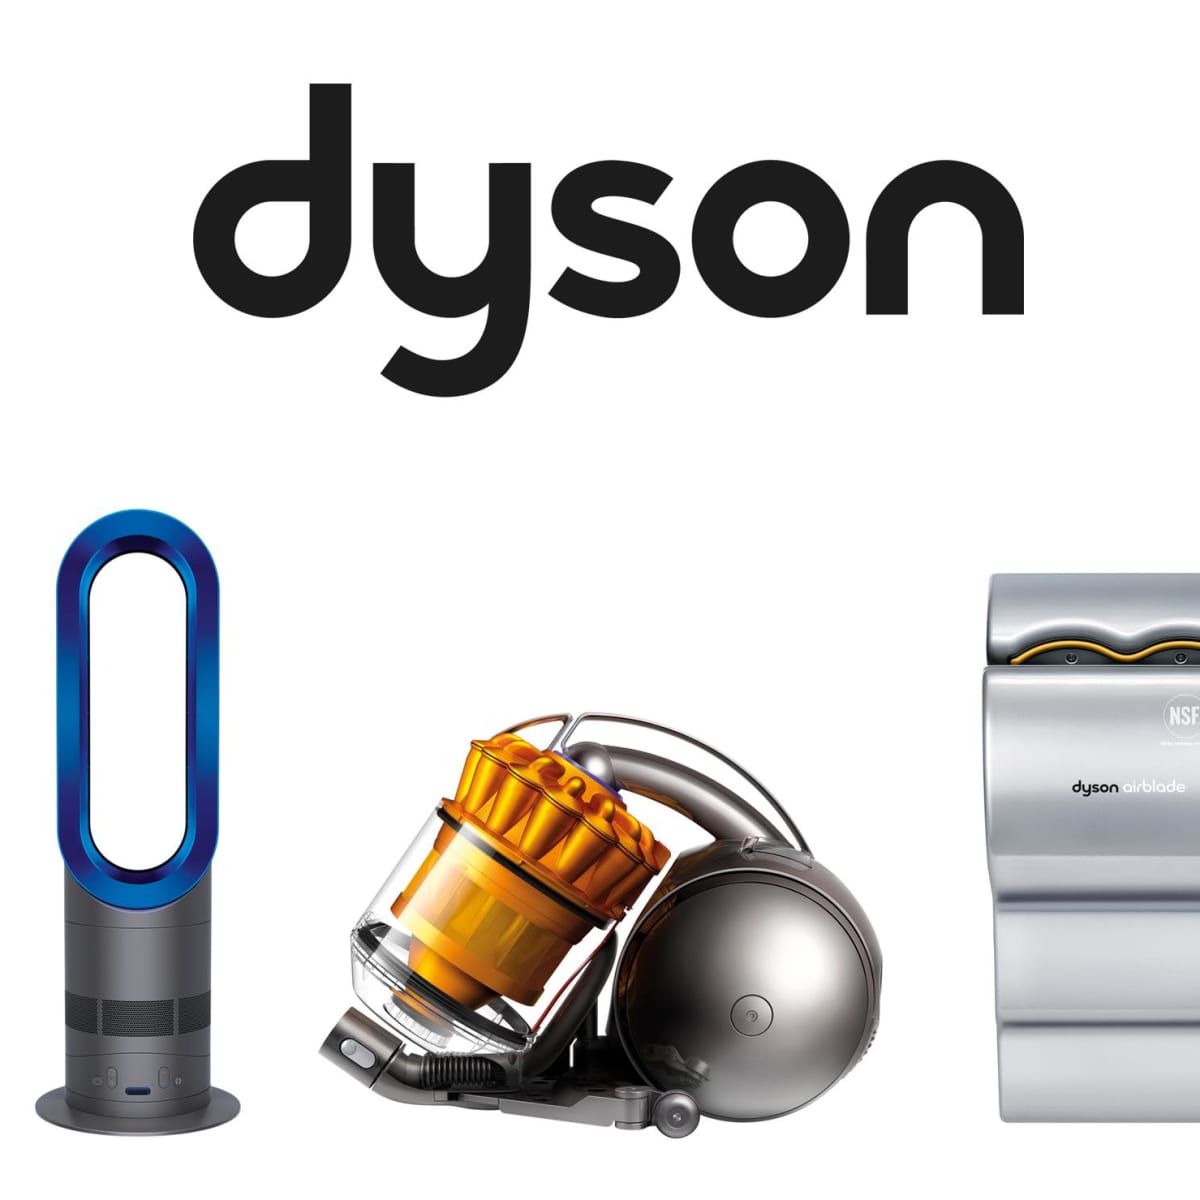 Дайсон маркет. Dyson. Дайсон бренд. Дайсон логотип. Пылесос Dyson логотип.